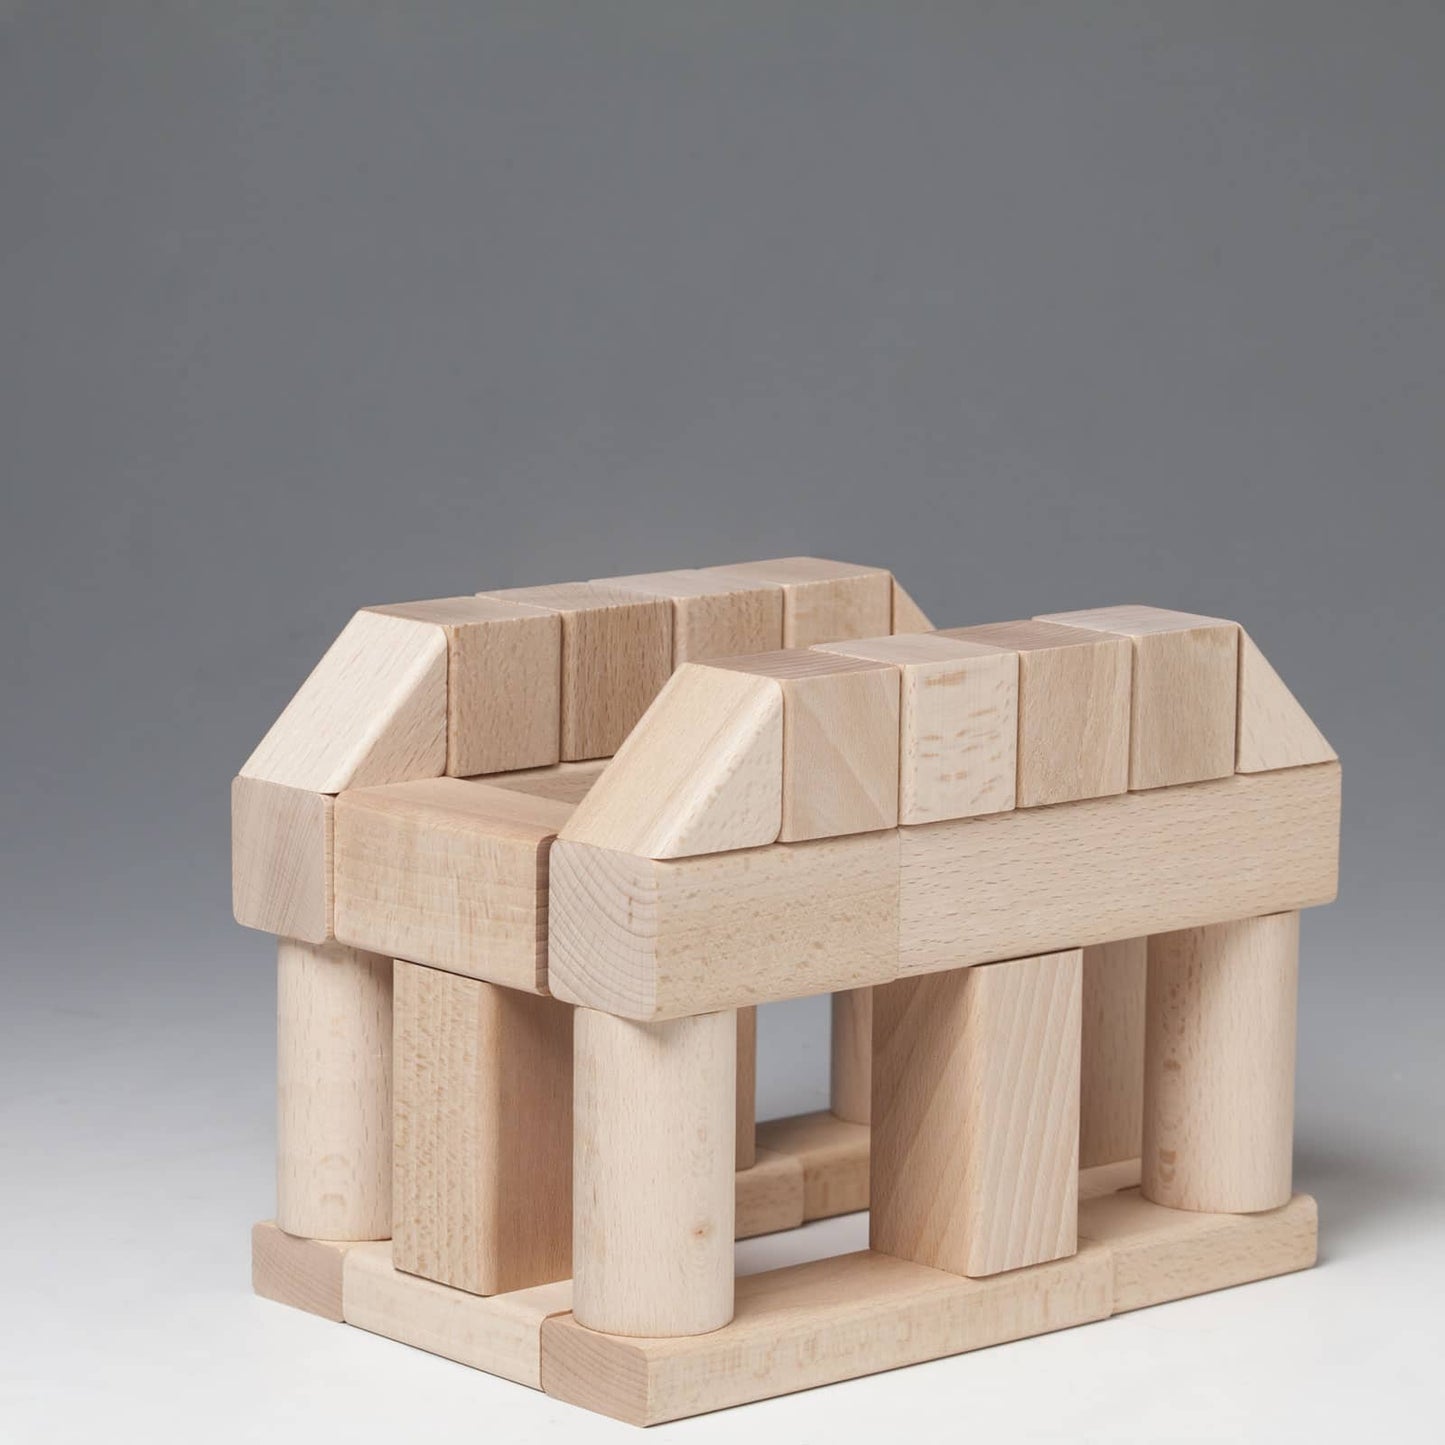 Build Wooden Blocks (Basic Set) - Milaniwood